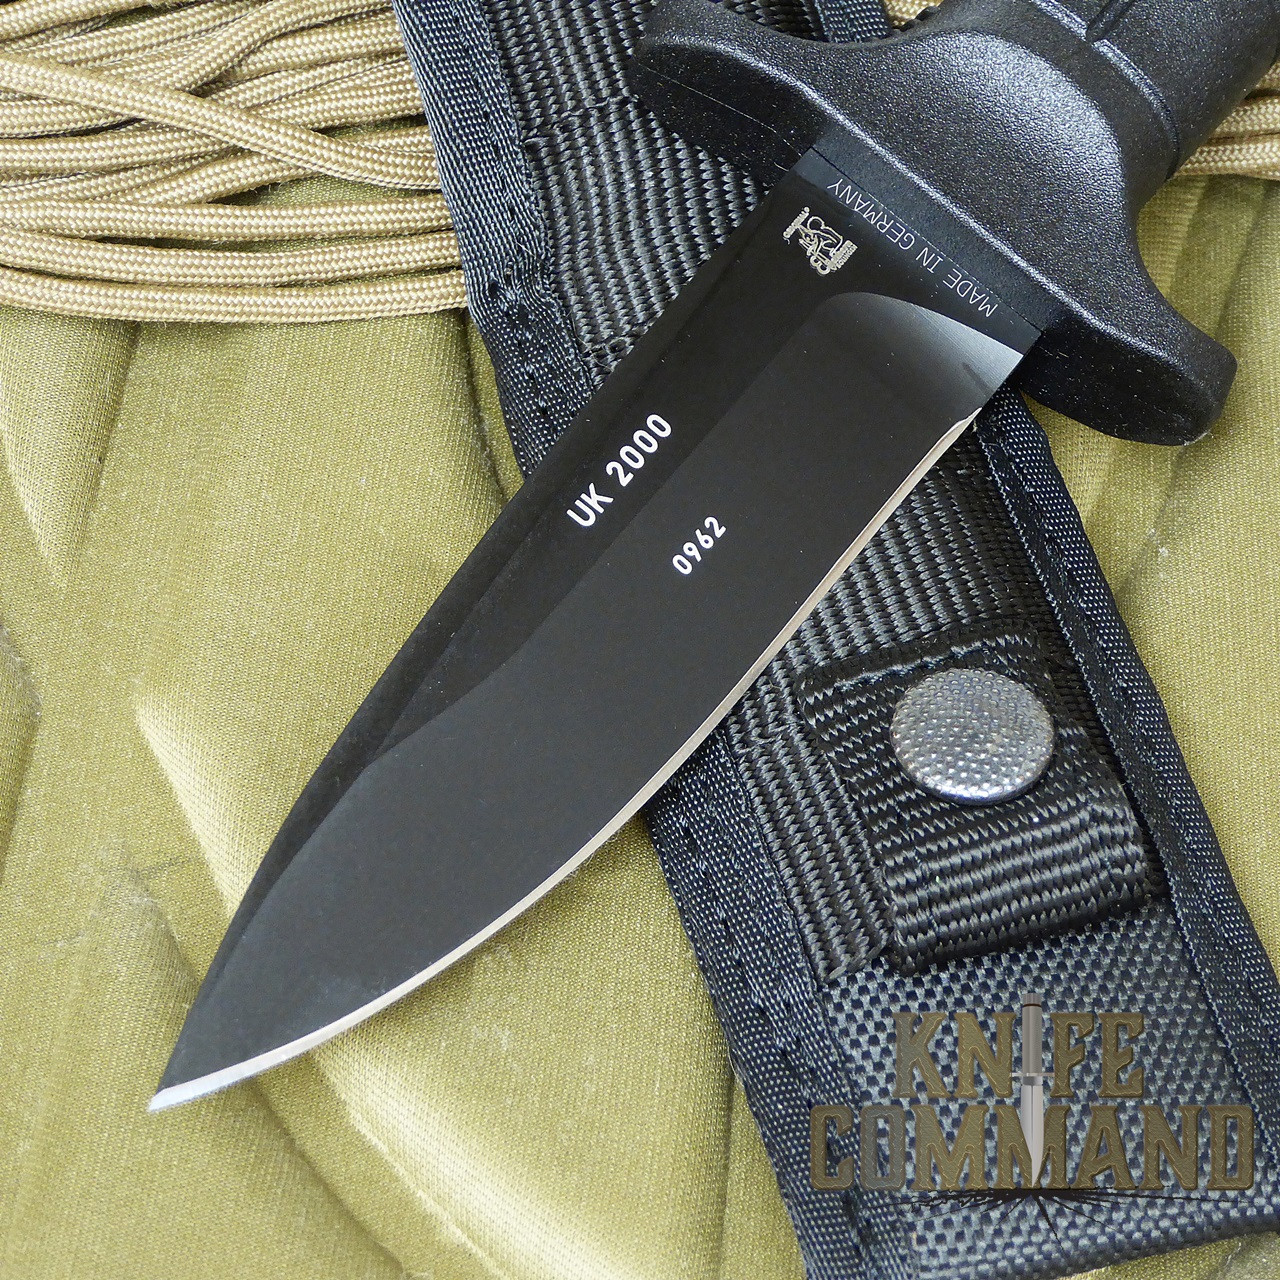 Eickhorn Solingen UK 2000 Lightweight Utility Combat Knife.  Versatile drop point blade.